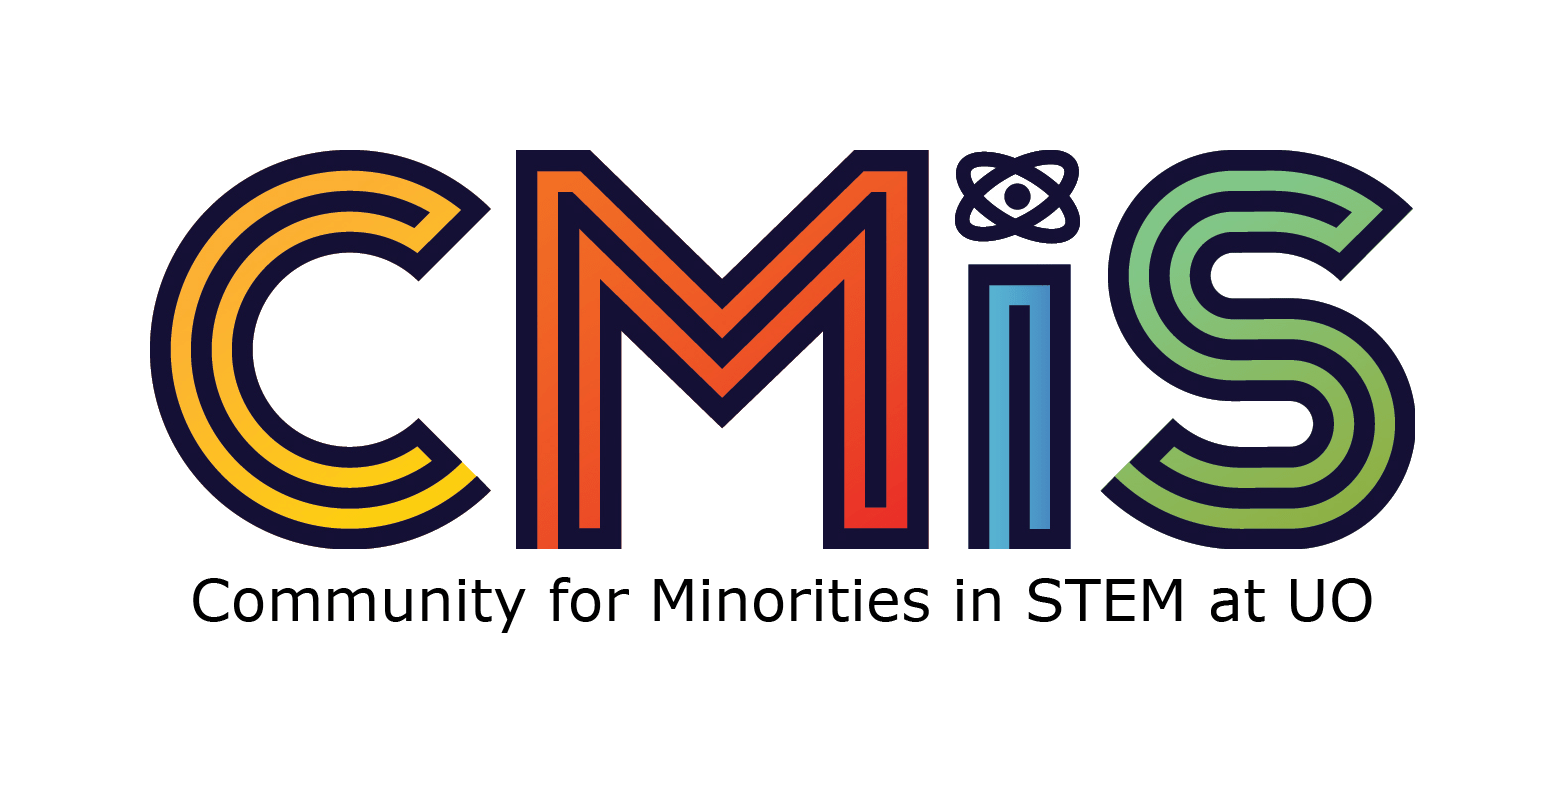 Community for Minorities in STEM at U. Oregon